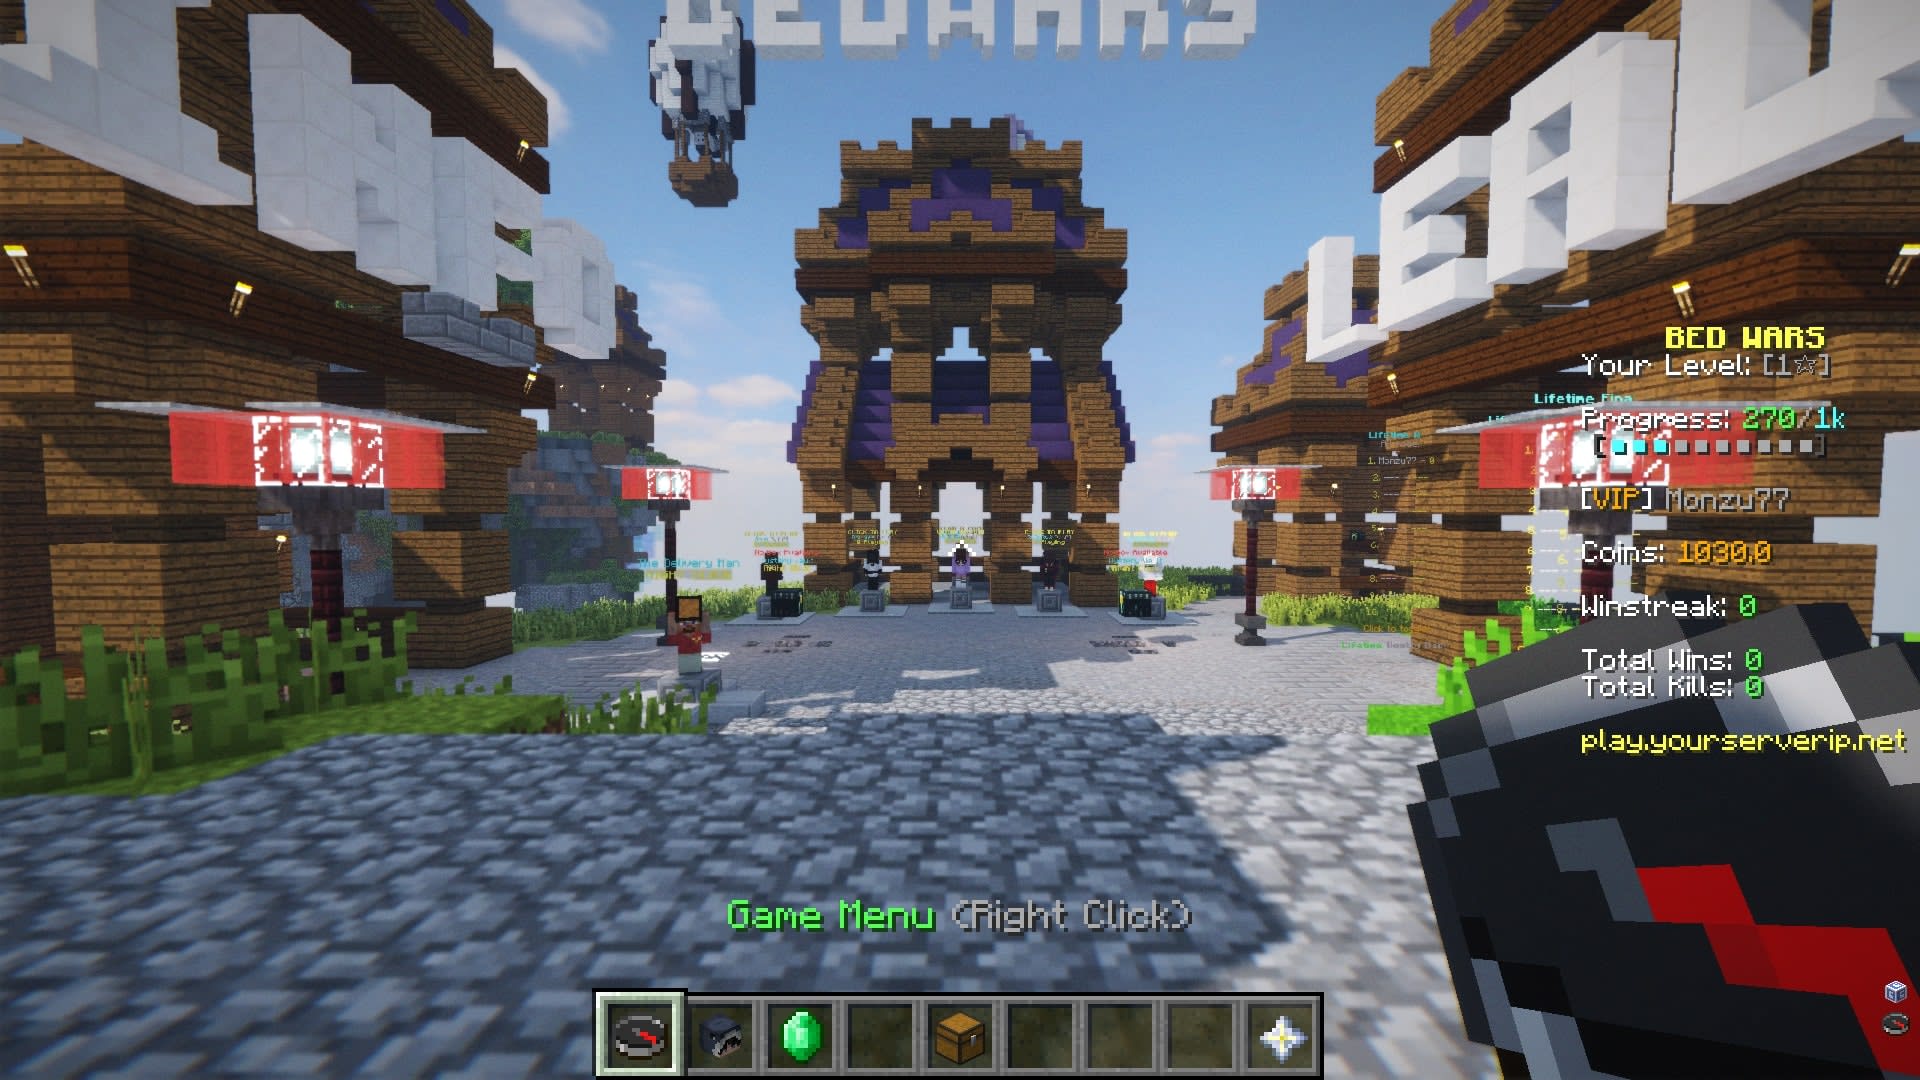 Minecraft BedWars Server, Play Free Now